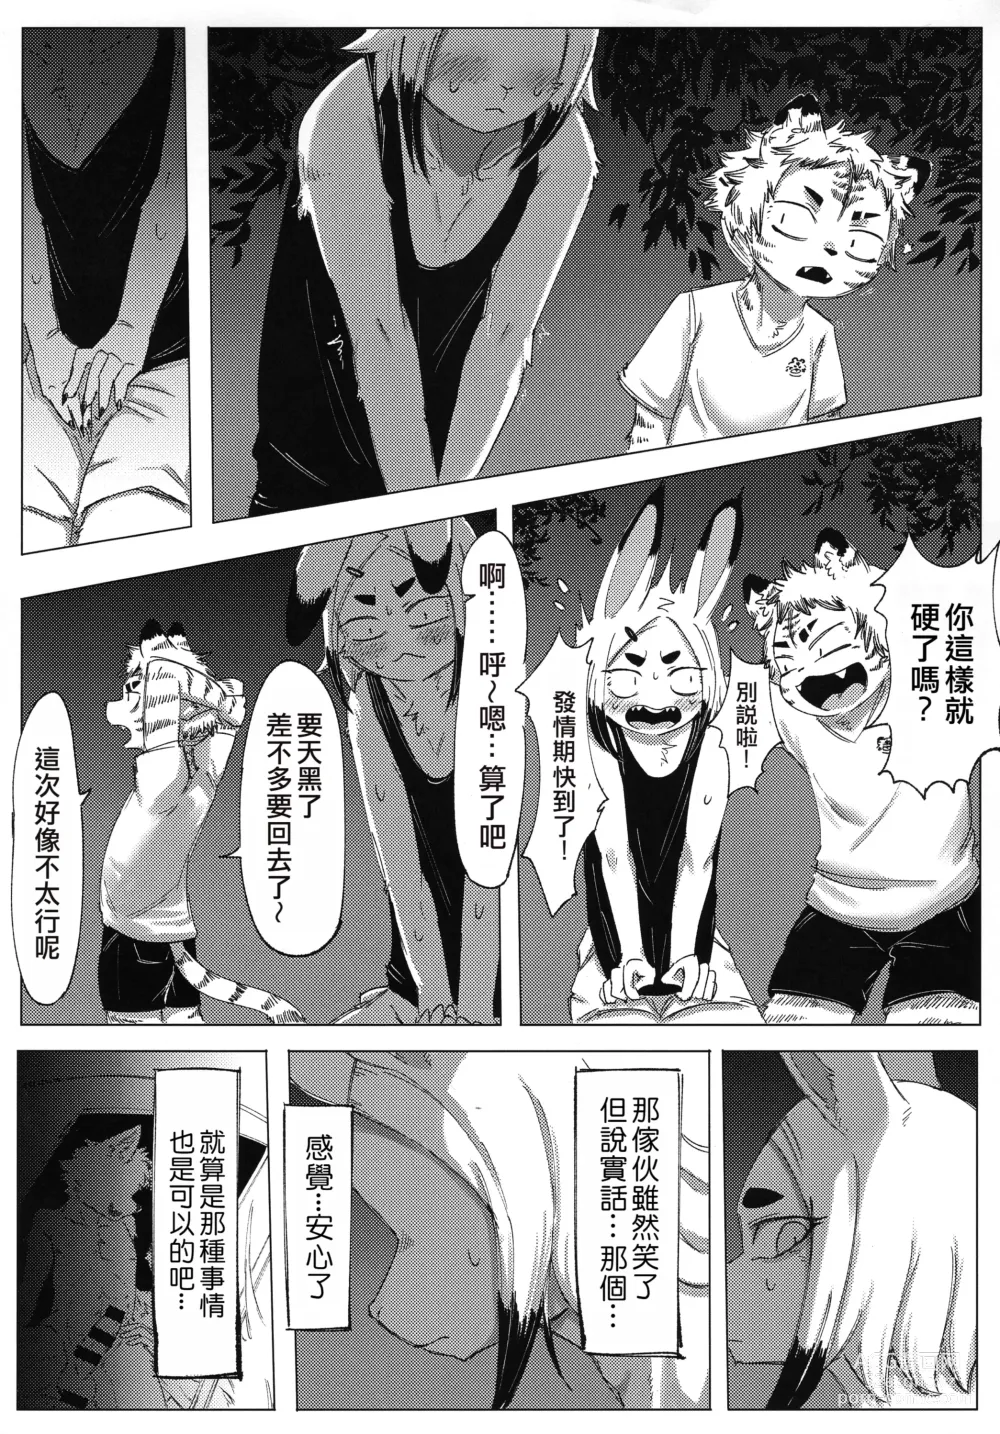 Page 4 of doujinshi 祭典前日